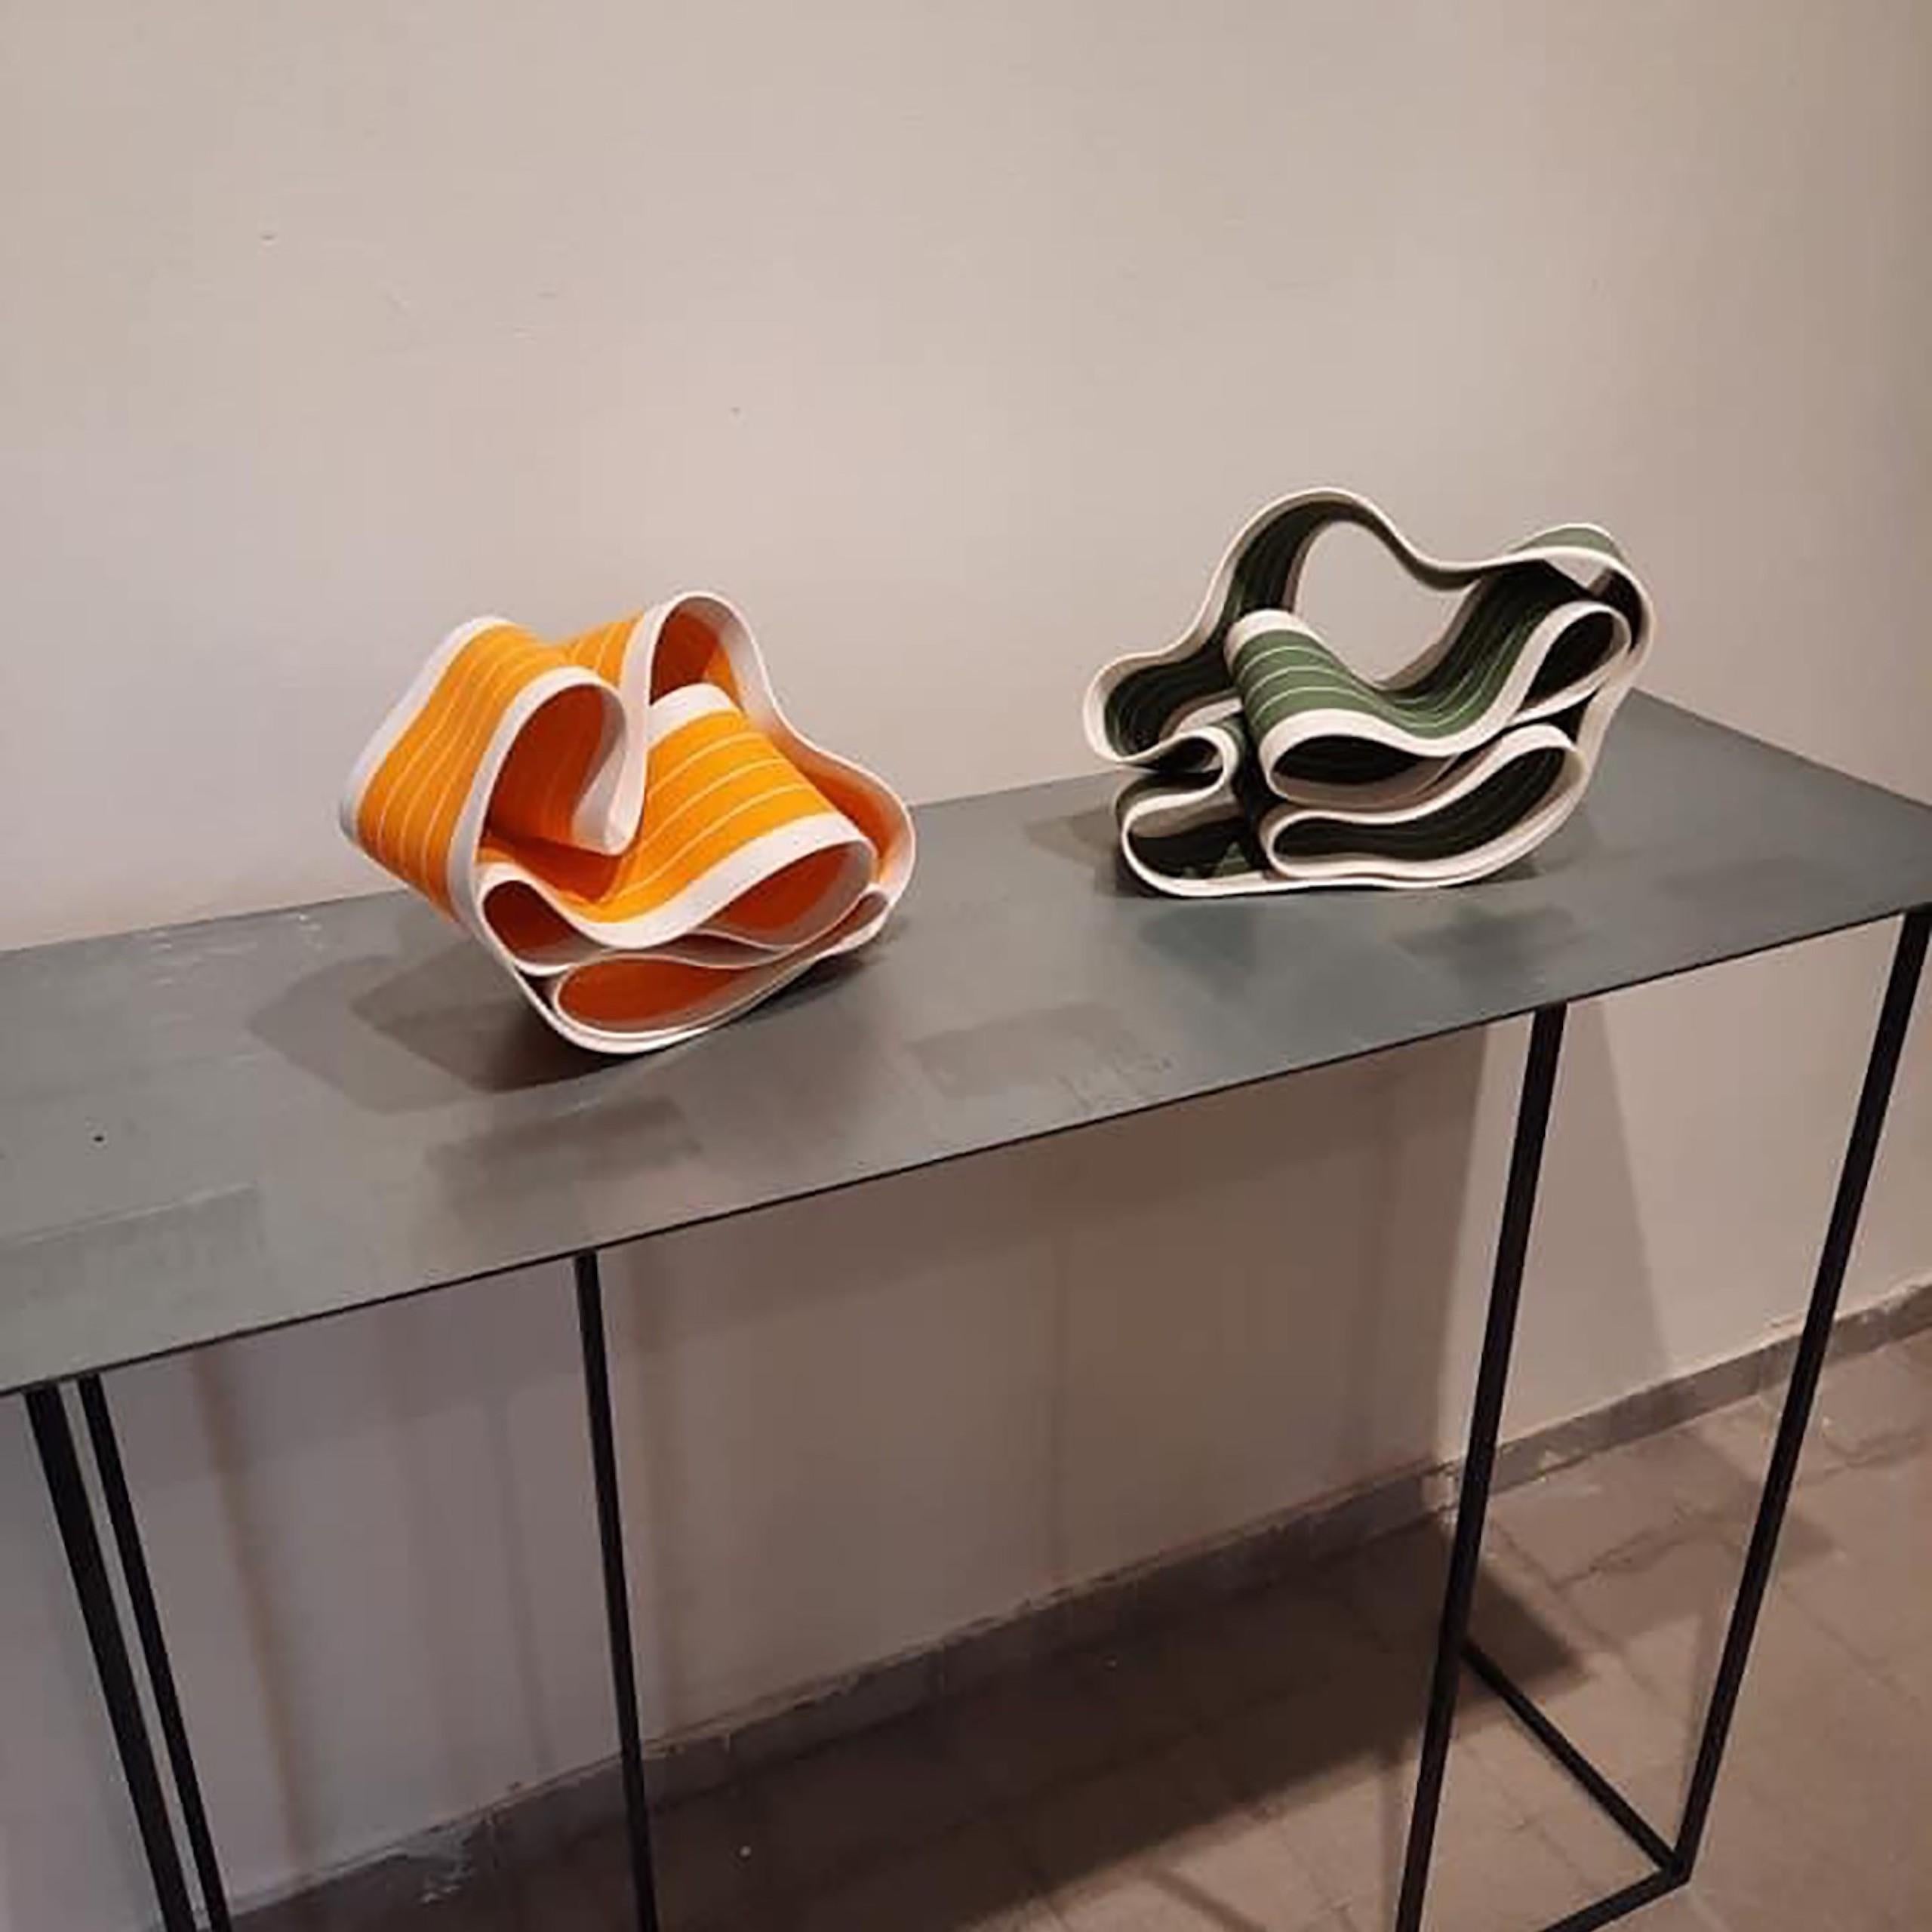 Folding in Motion 5 by Simcha Even-Chen - Porcelain sculpture, orange, line For Sale 5